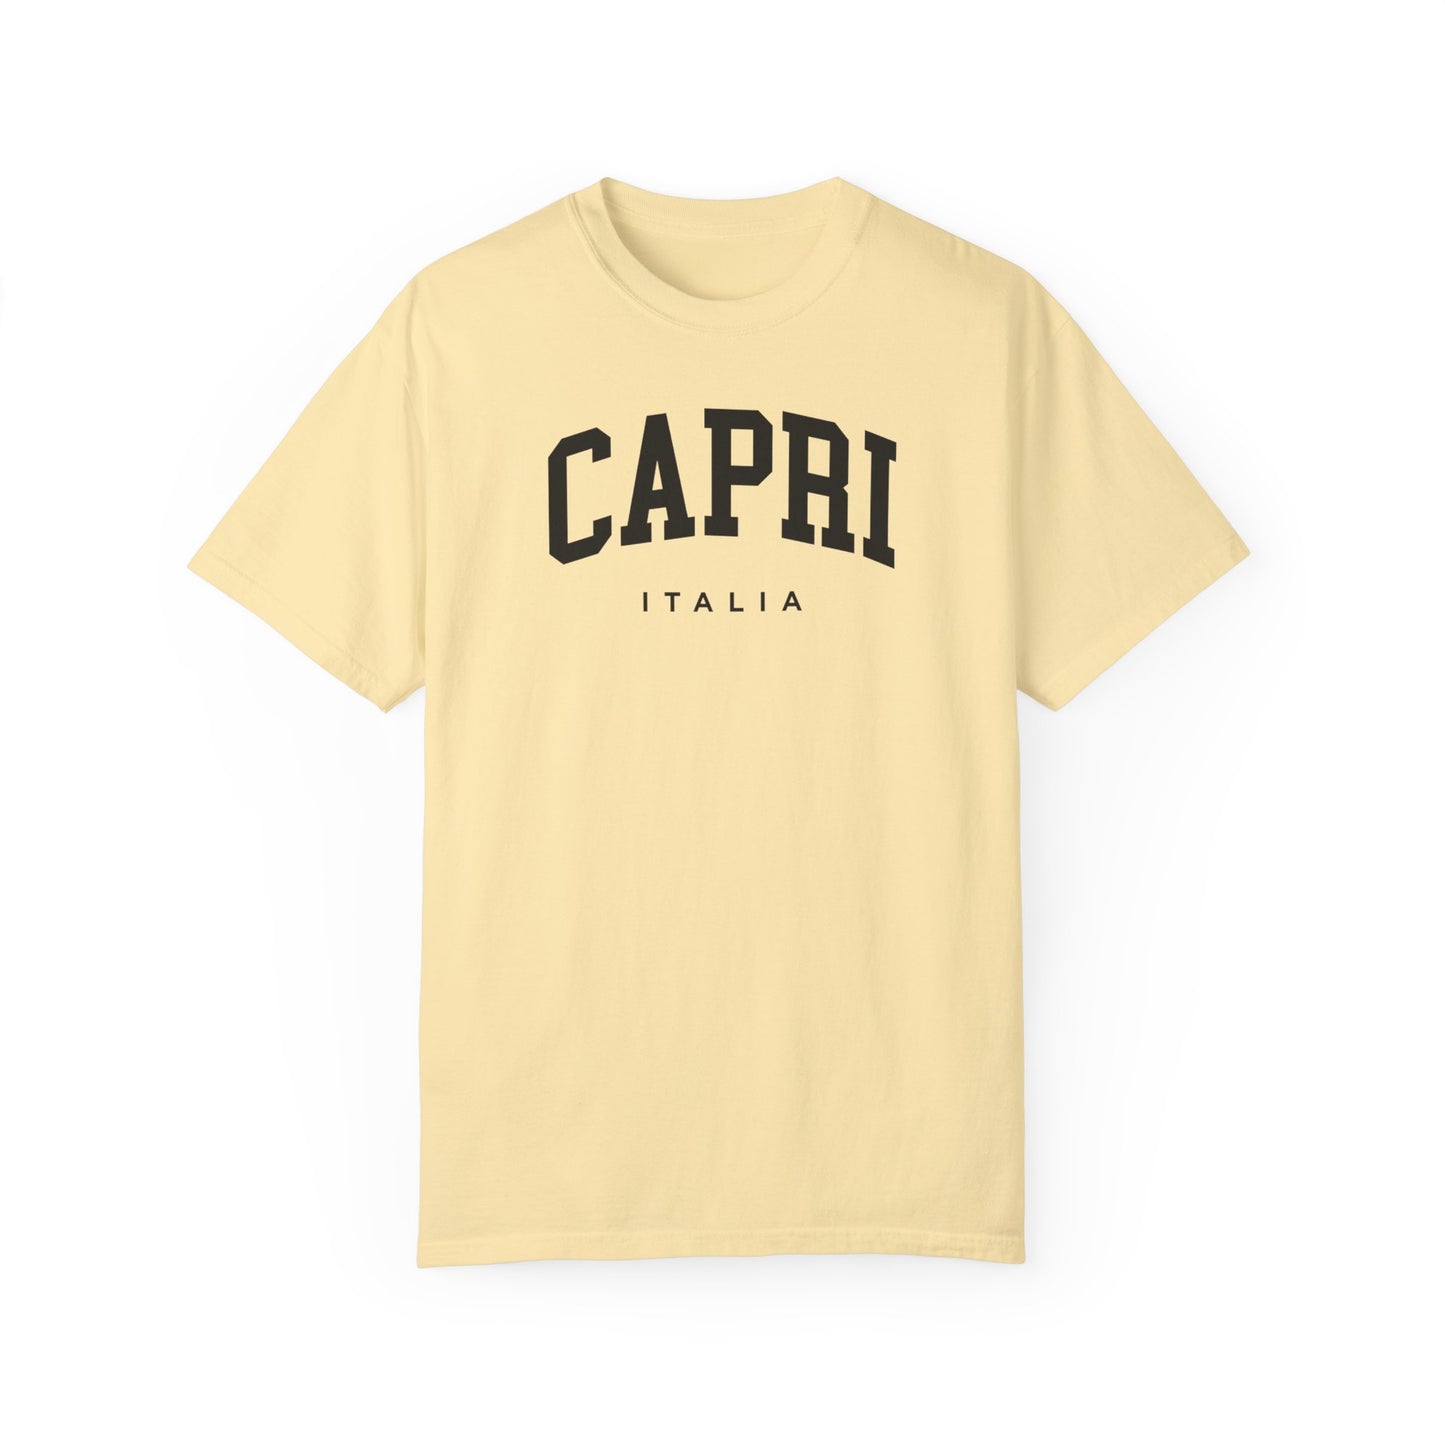 Capri Italy Comfort Colors® Tee